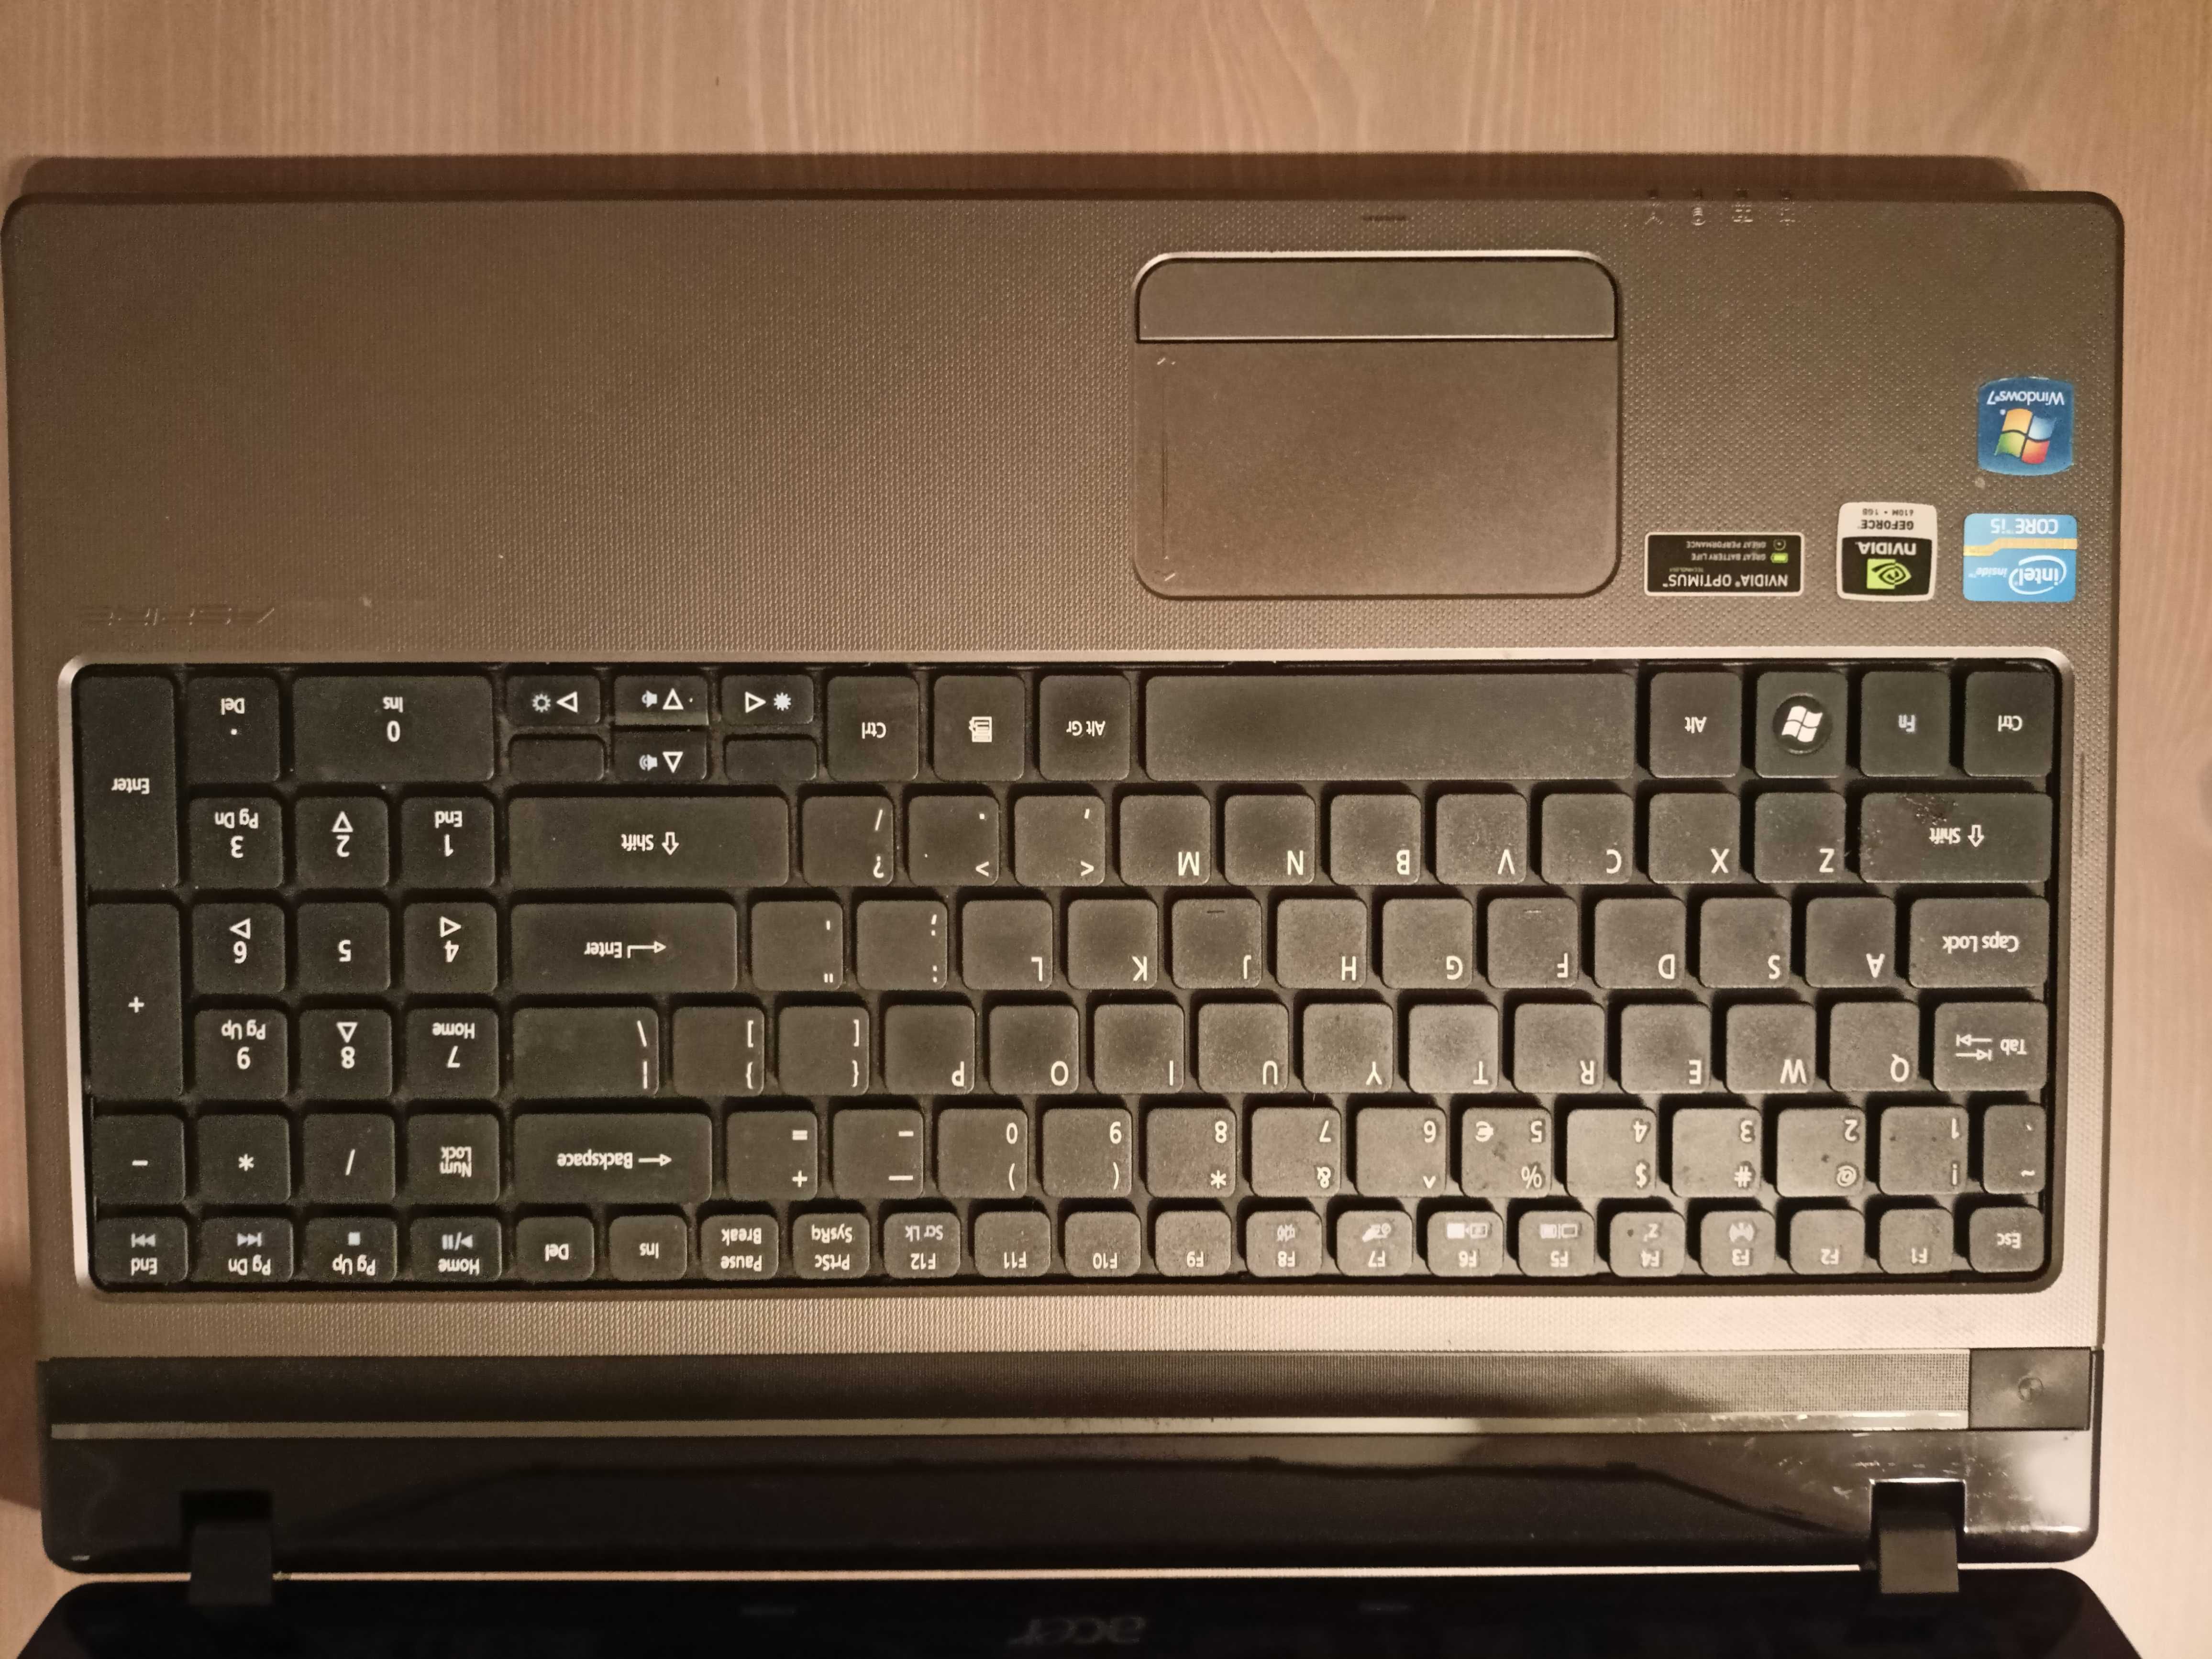 Laptop Acer Aspire 5750